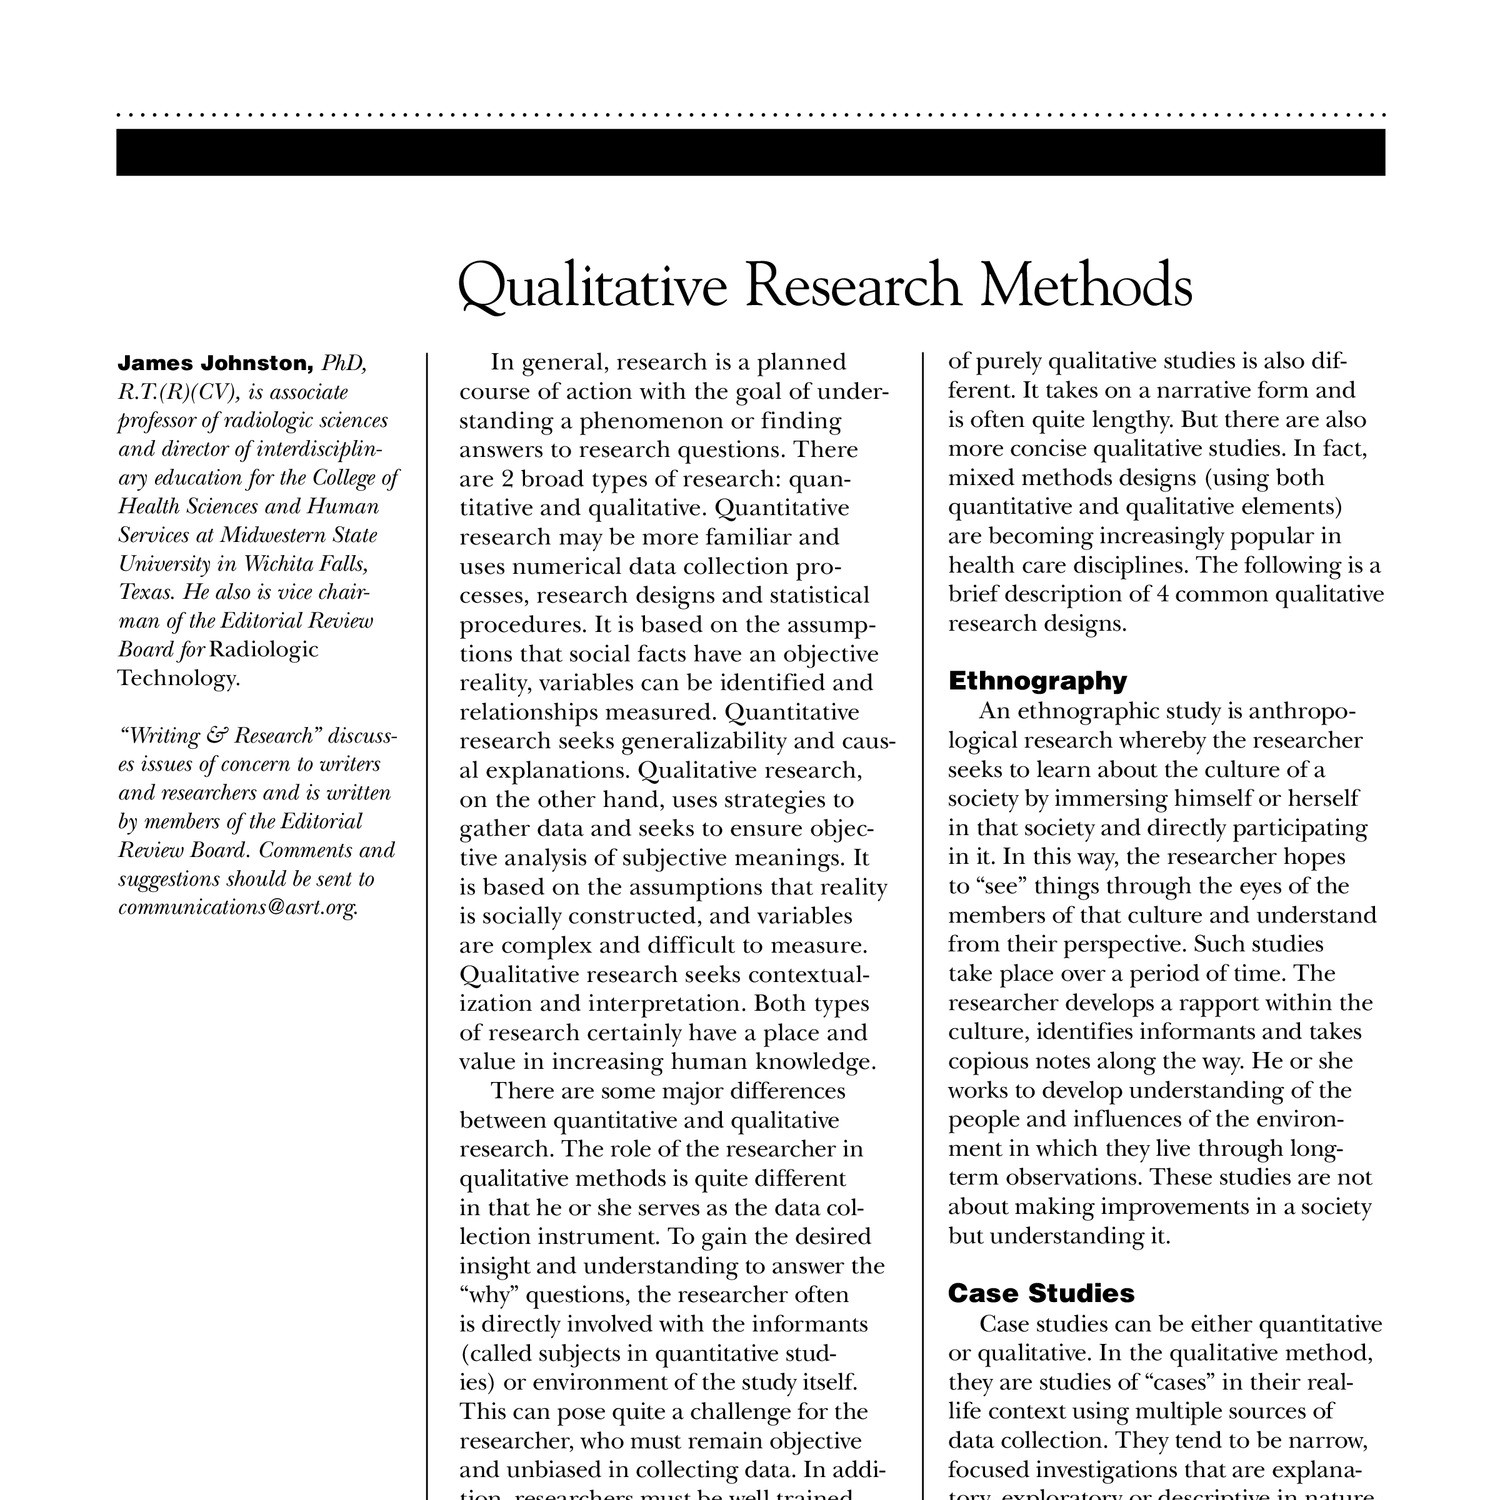 merriam 1998 qualitative research pdf